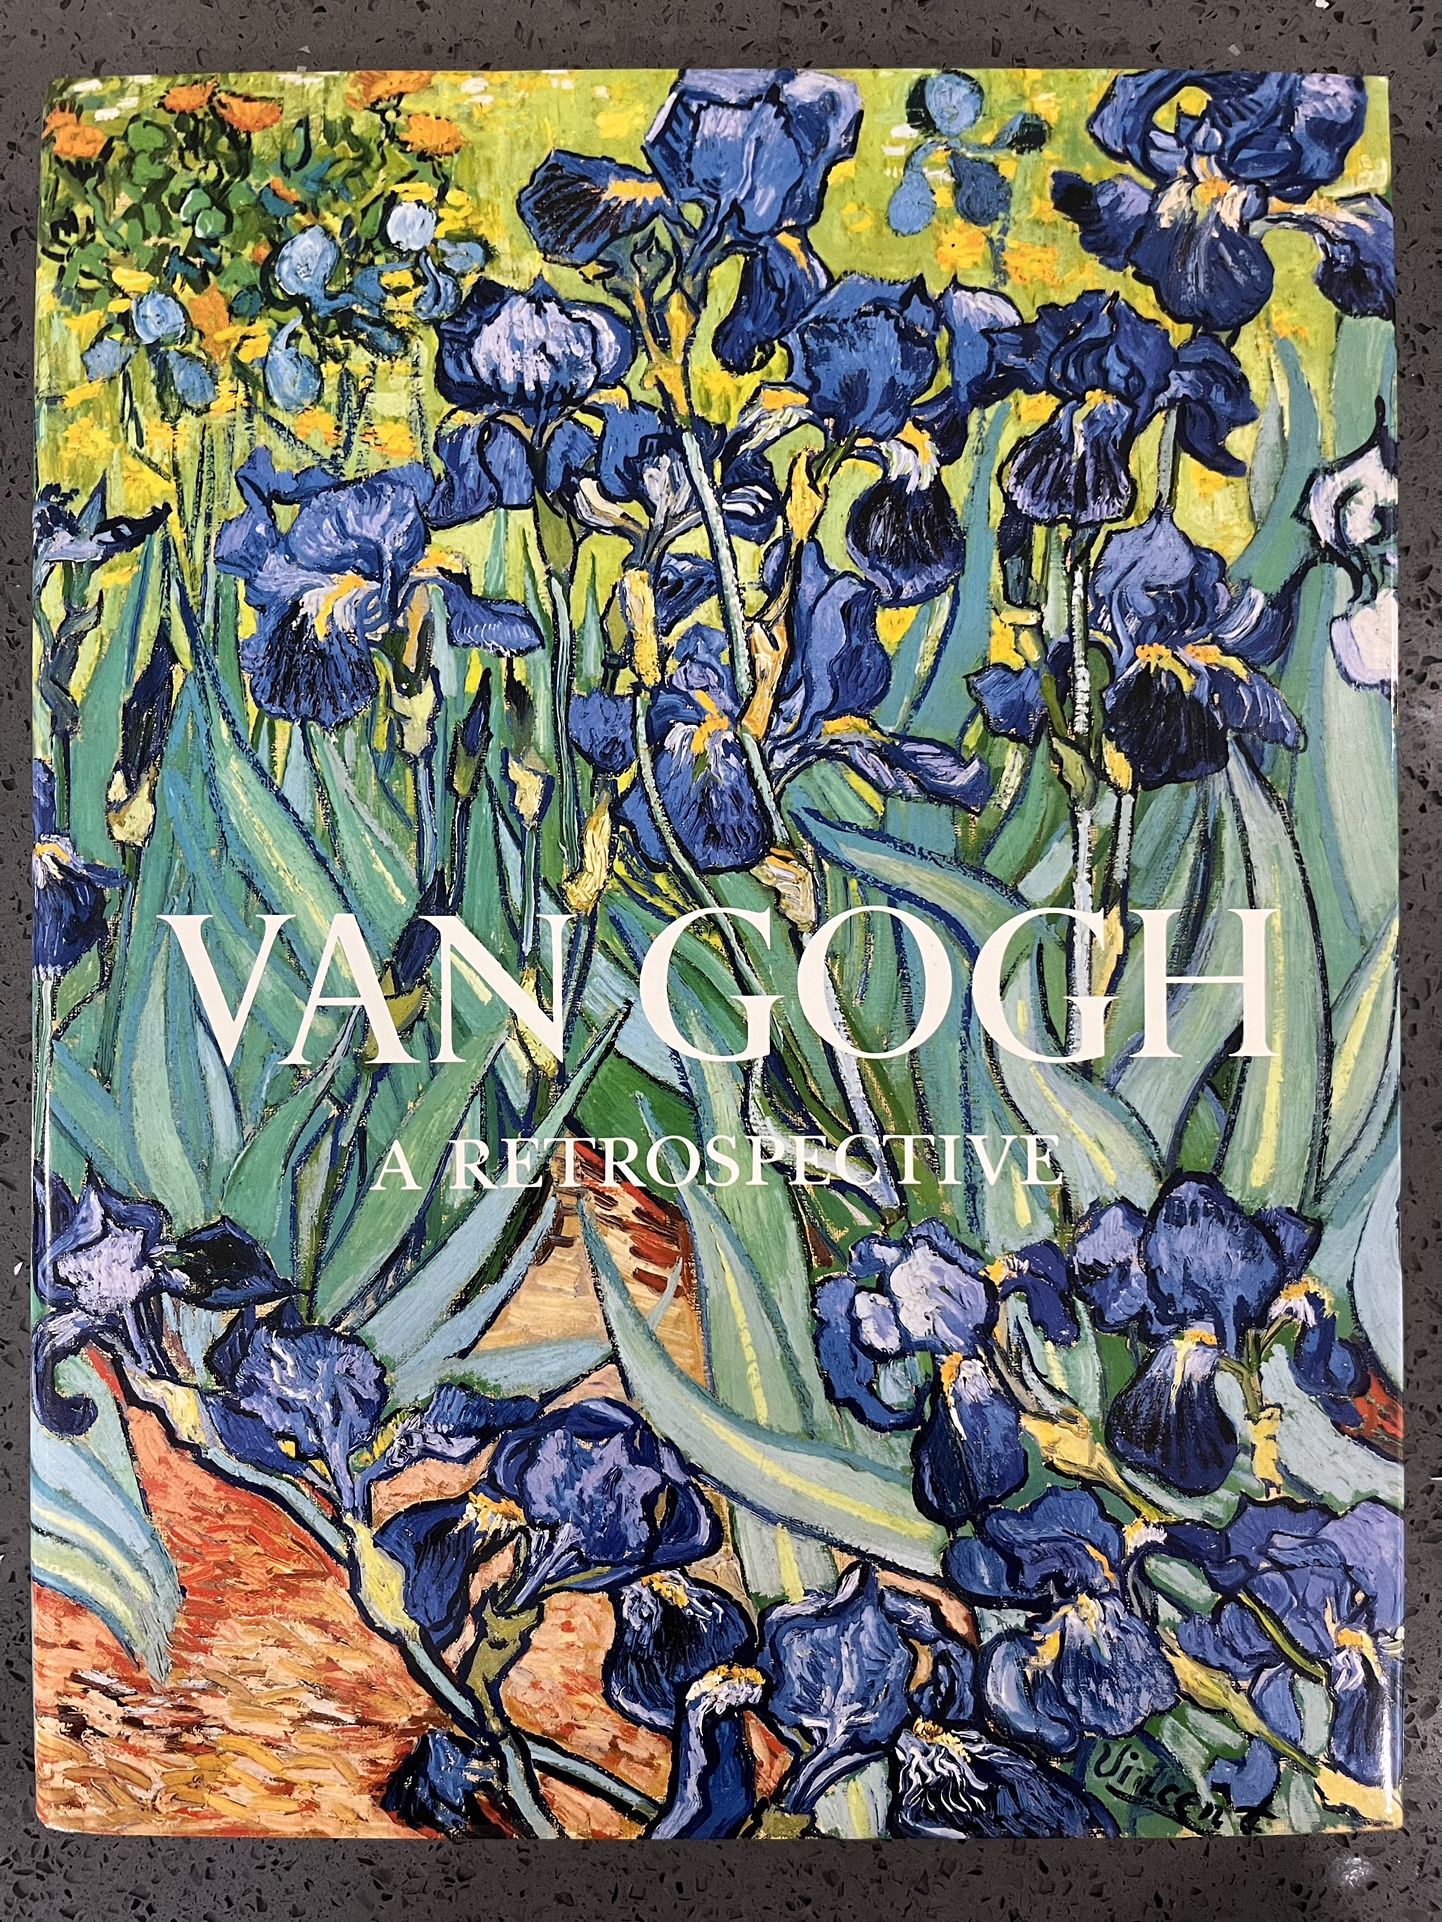 Van Gogh A Retrospective Book